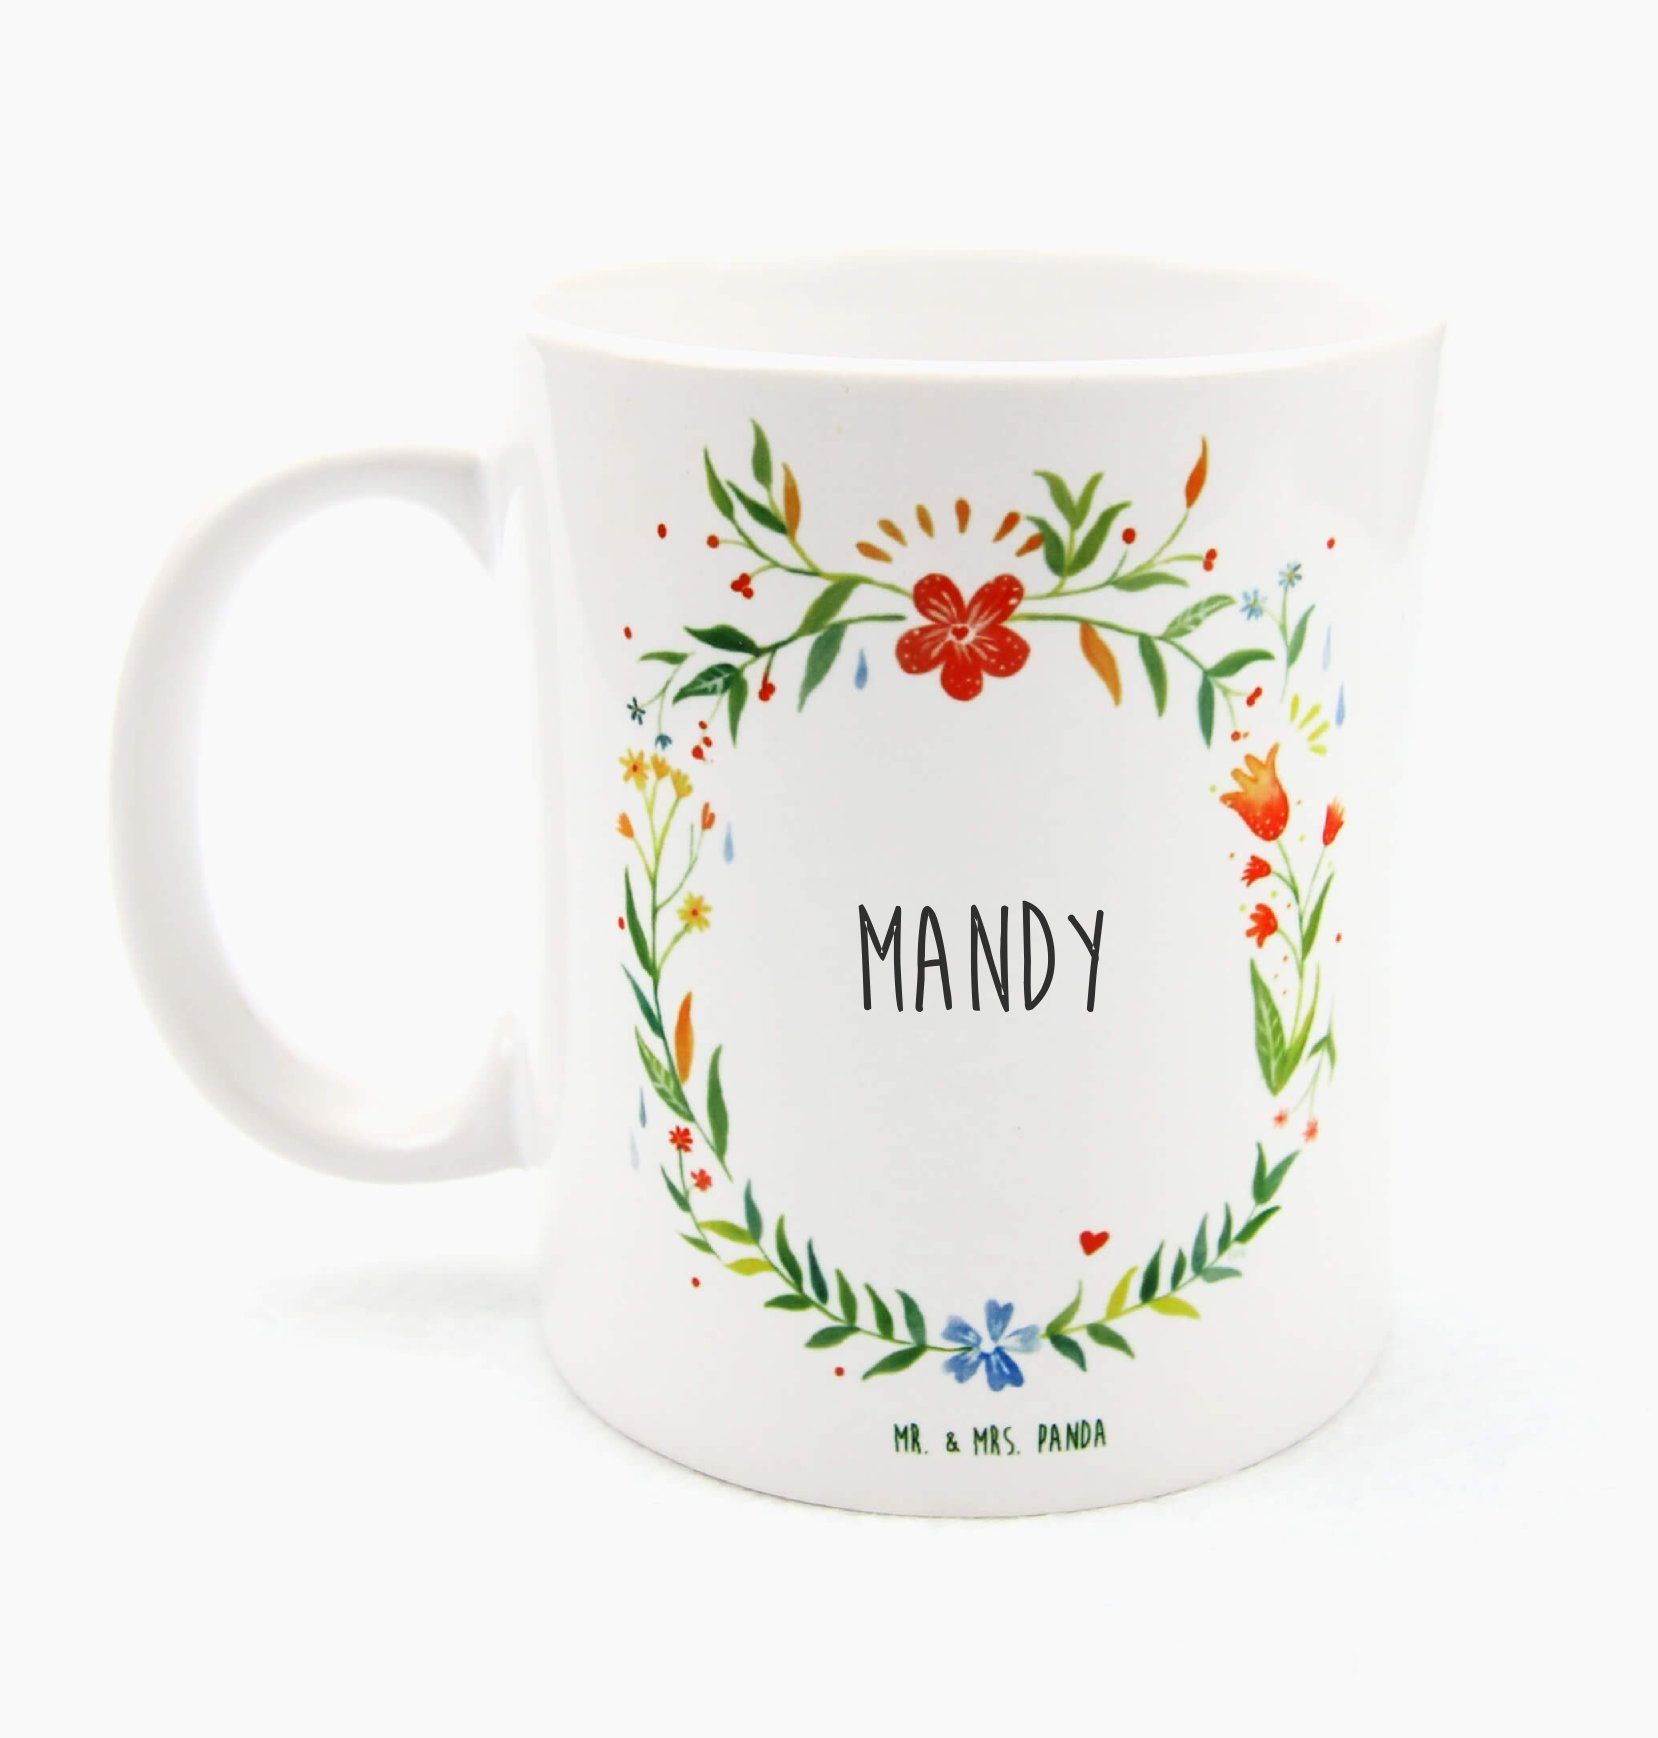 Mr. & Mrs. Panda Tasse Mandy - Geschenk, Kaffeetasse, Tasse Sprüche, Büro Tasse, Keramiktass, Keramik